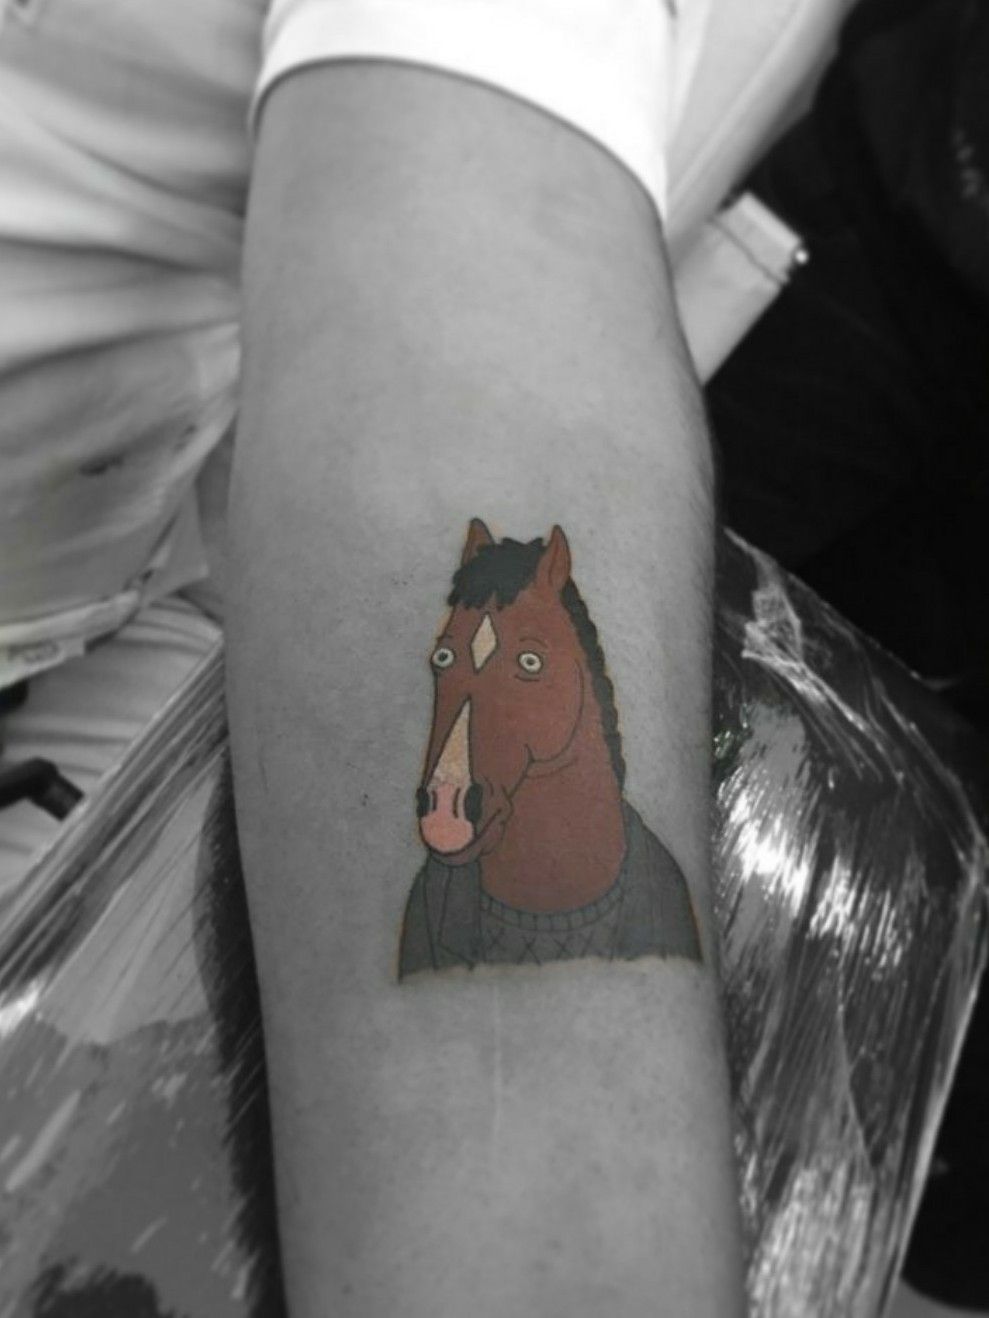 BoJack Horseman Tattoos  All Things Tattoo